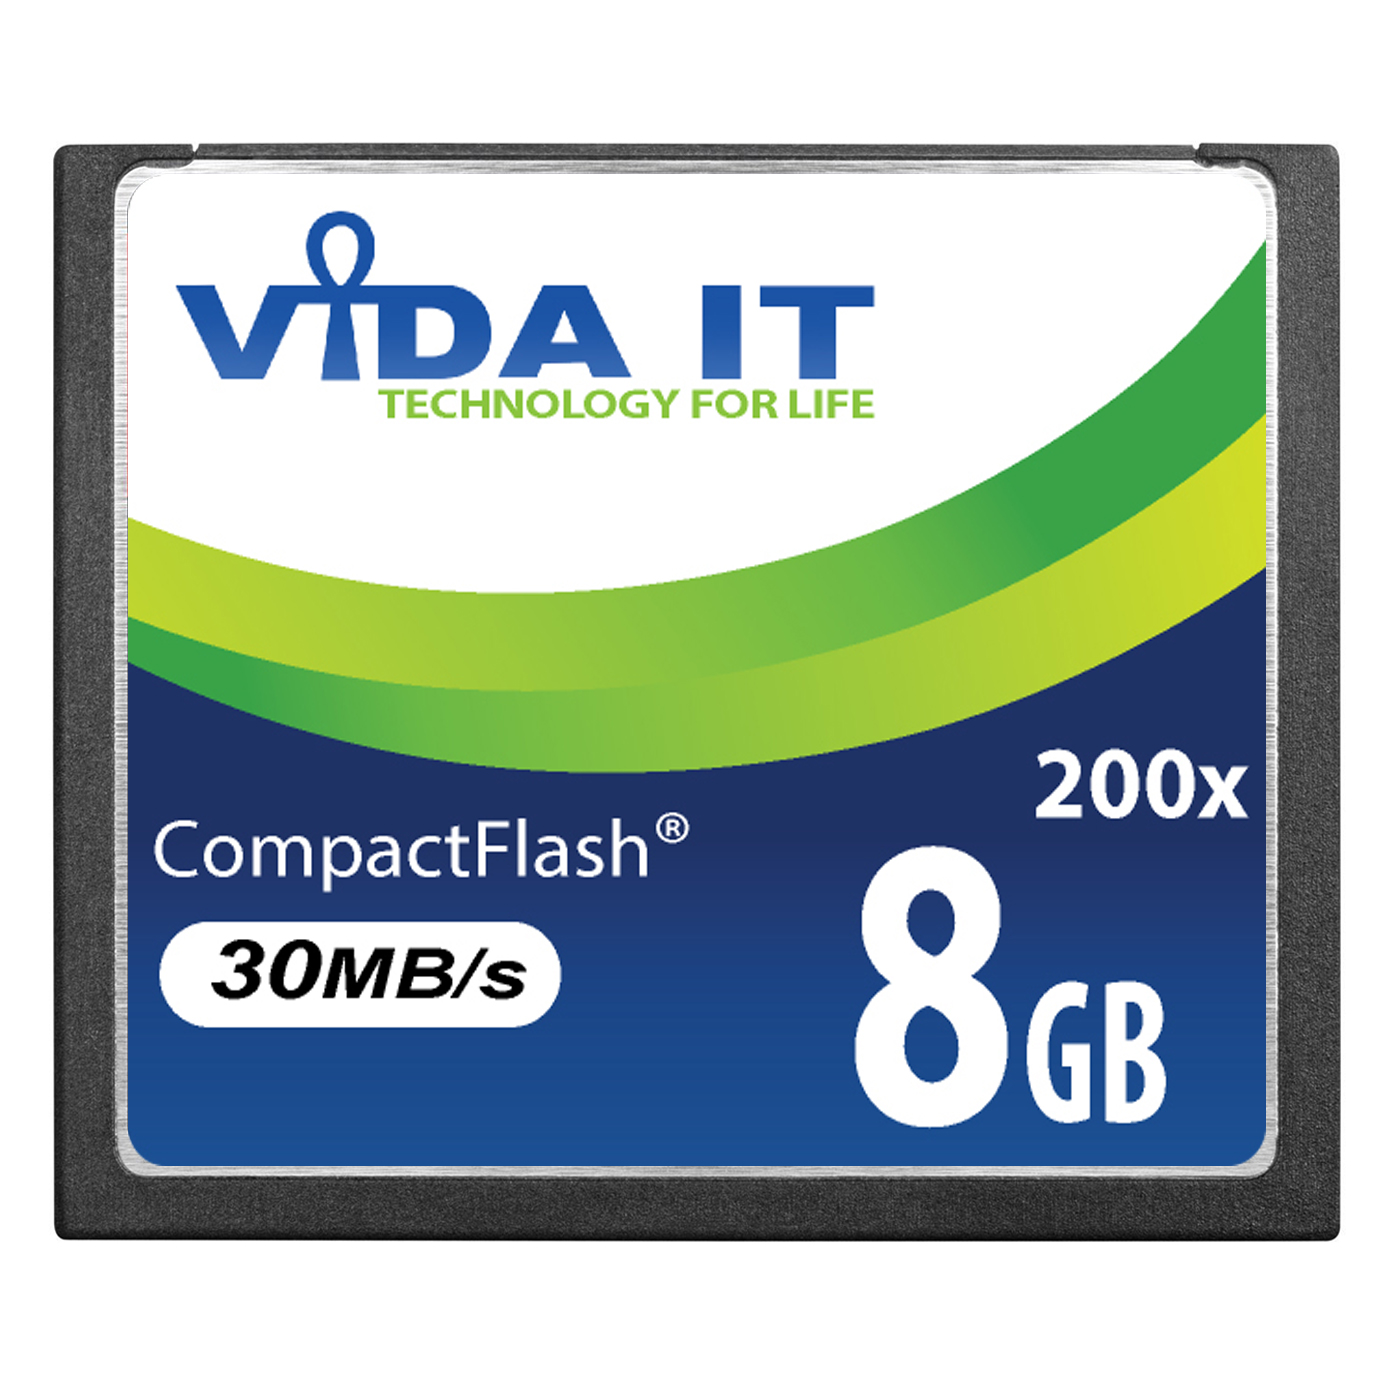 Vida IT® 8GB CF Compact Flash Memory Card High Speed 200X 30MB/s for SLR Digital Camera